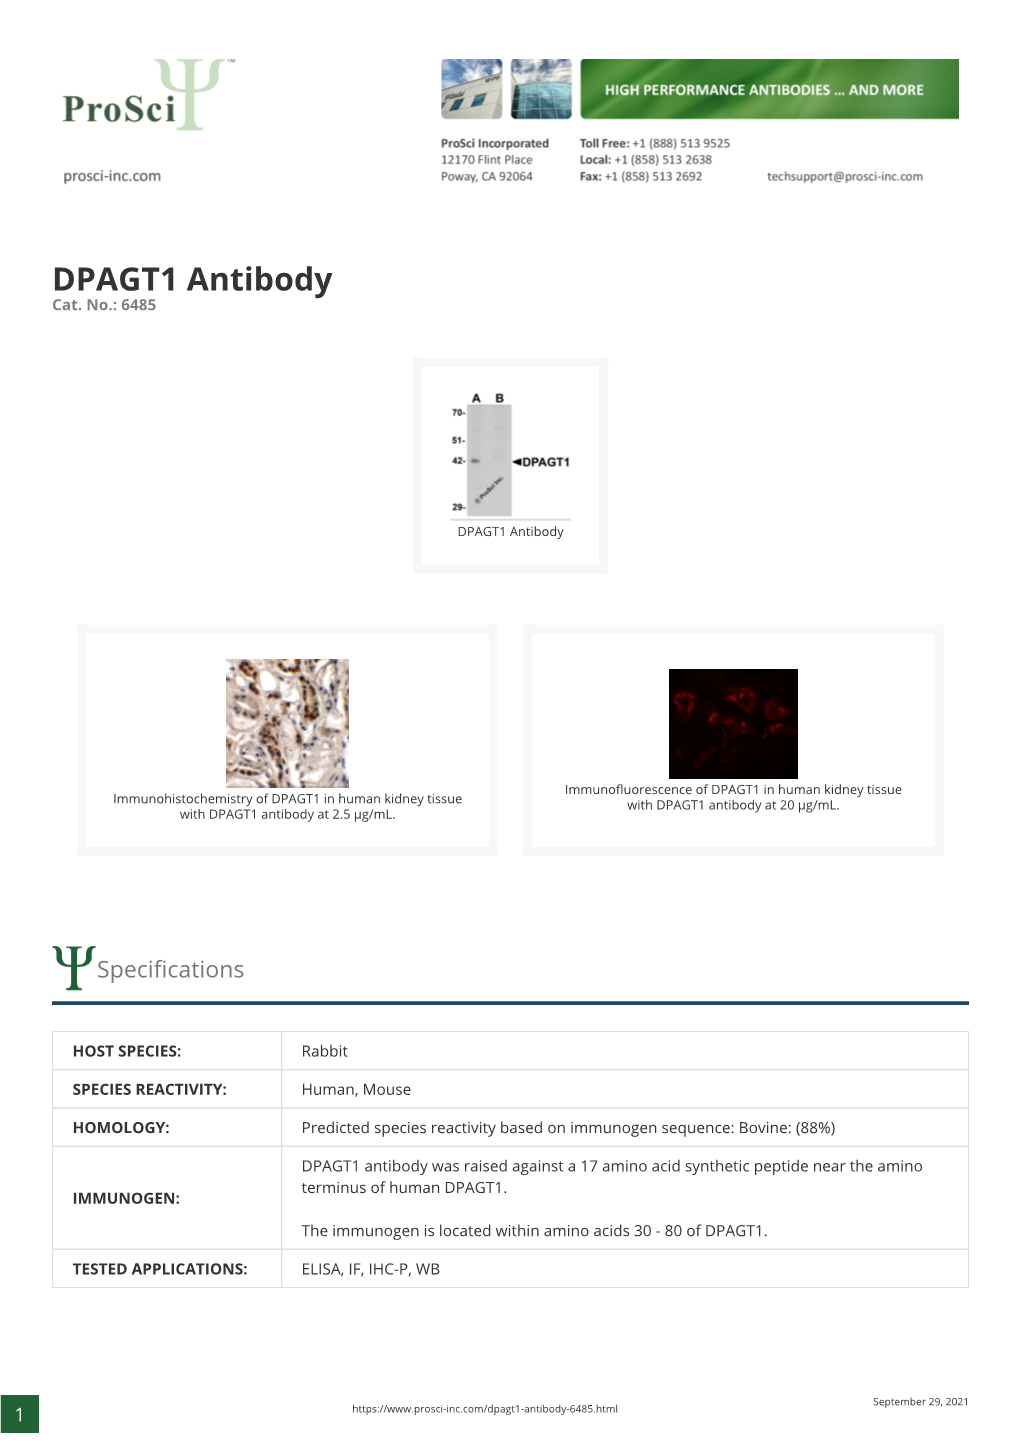 DPAGT1 Antibody Cat